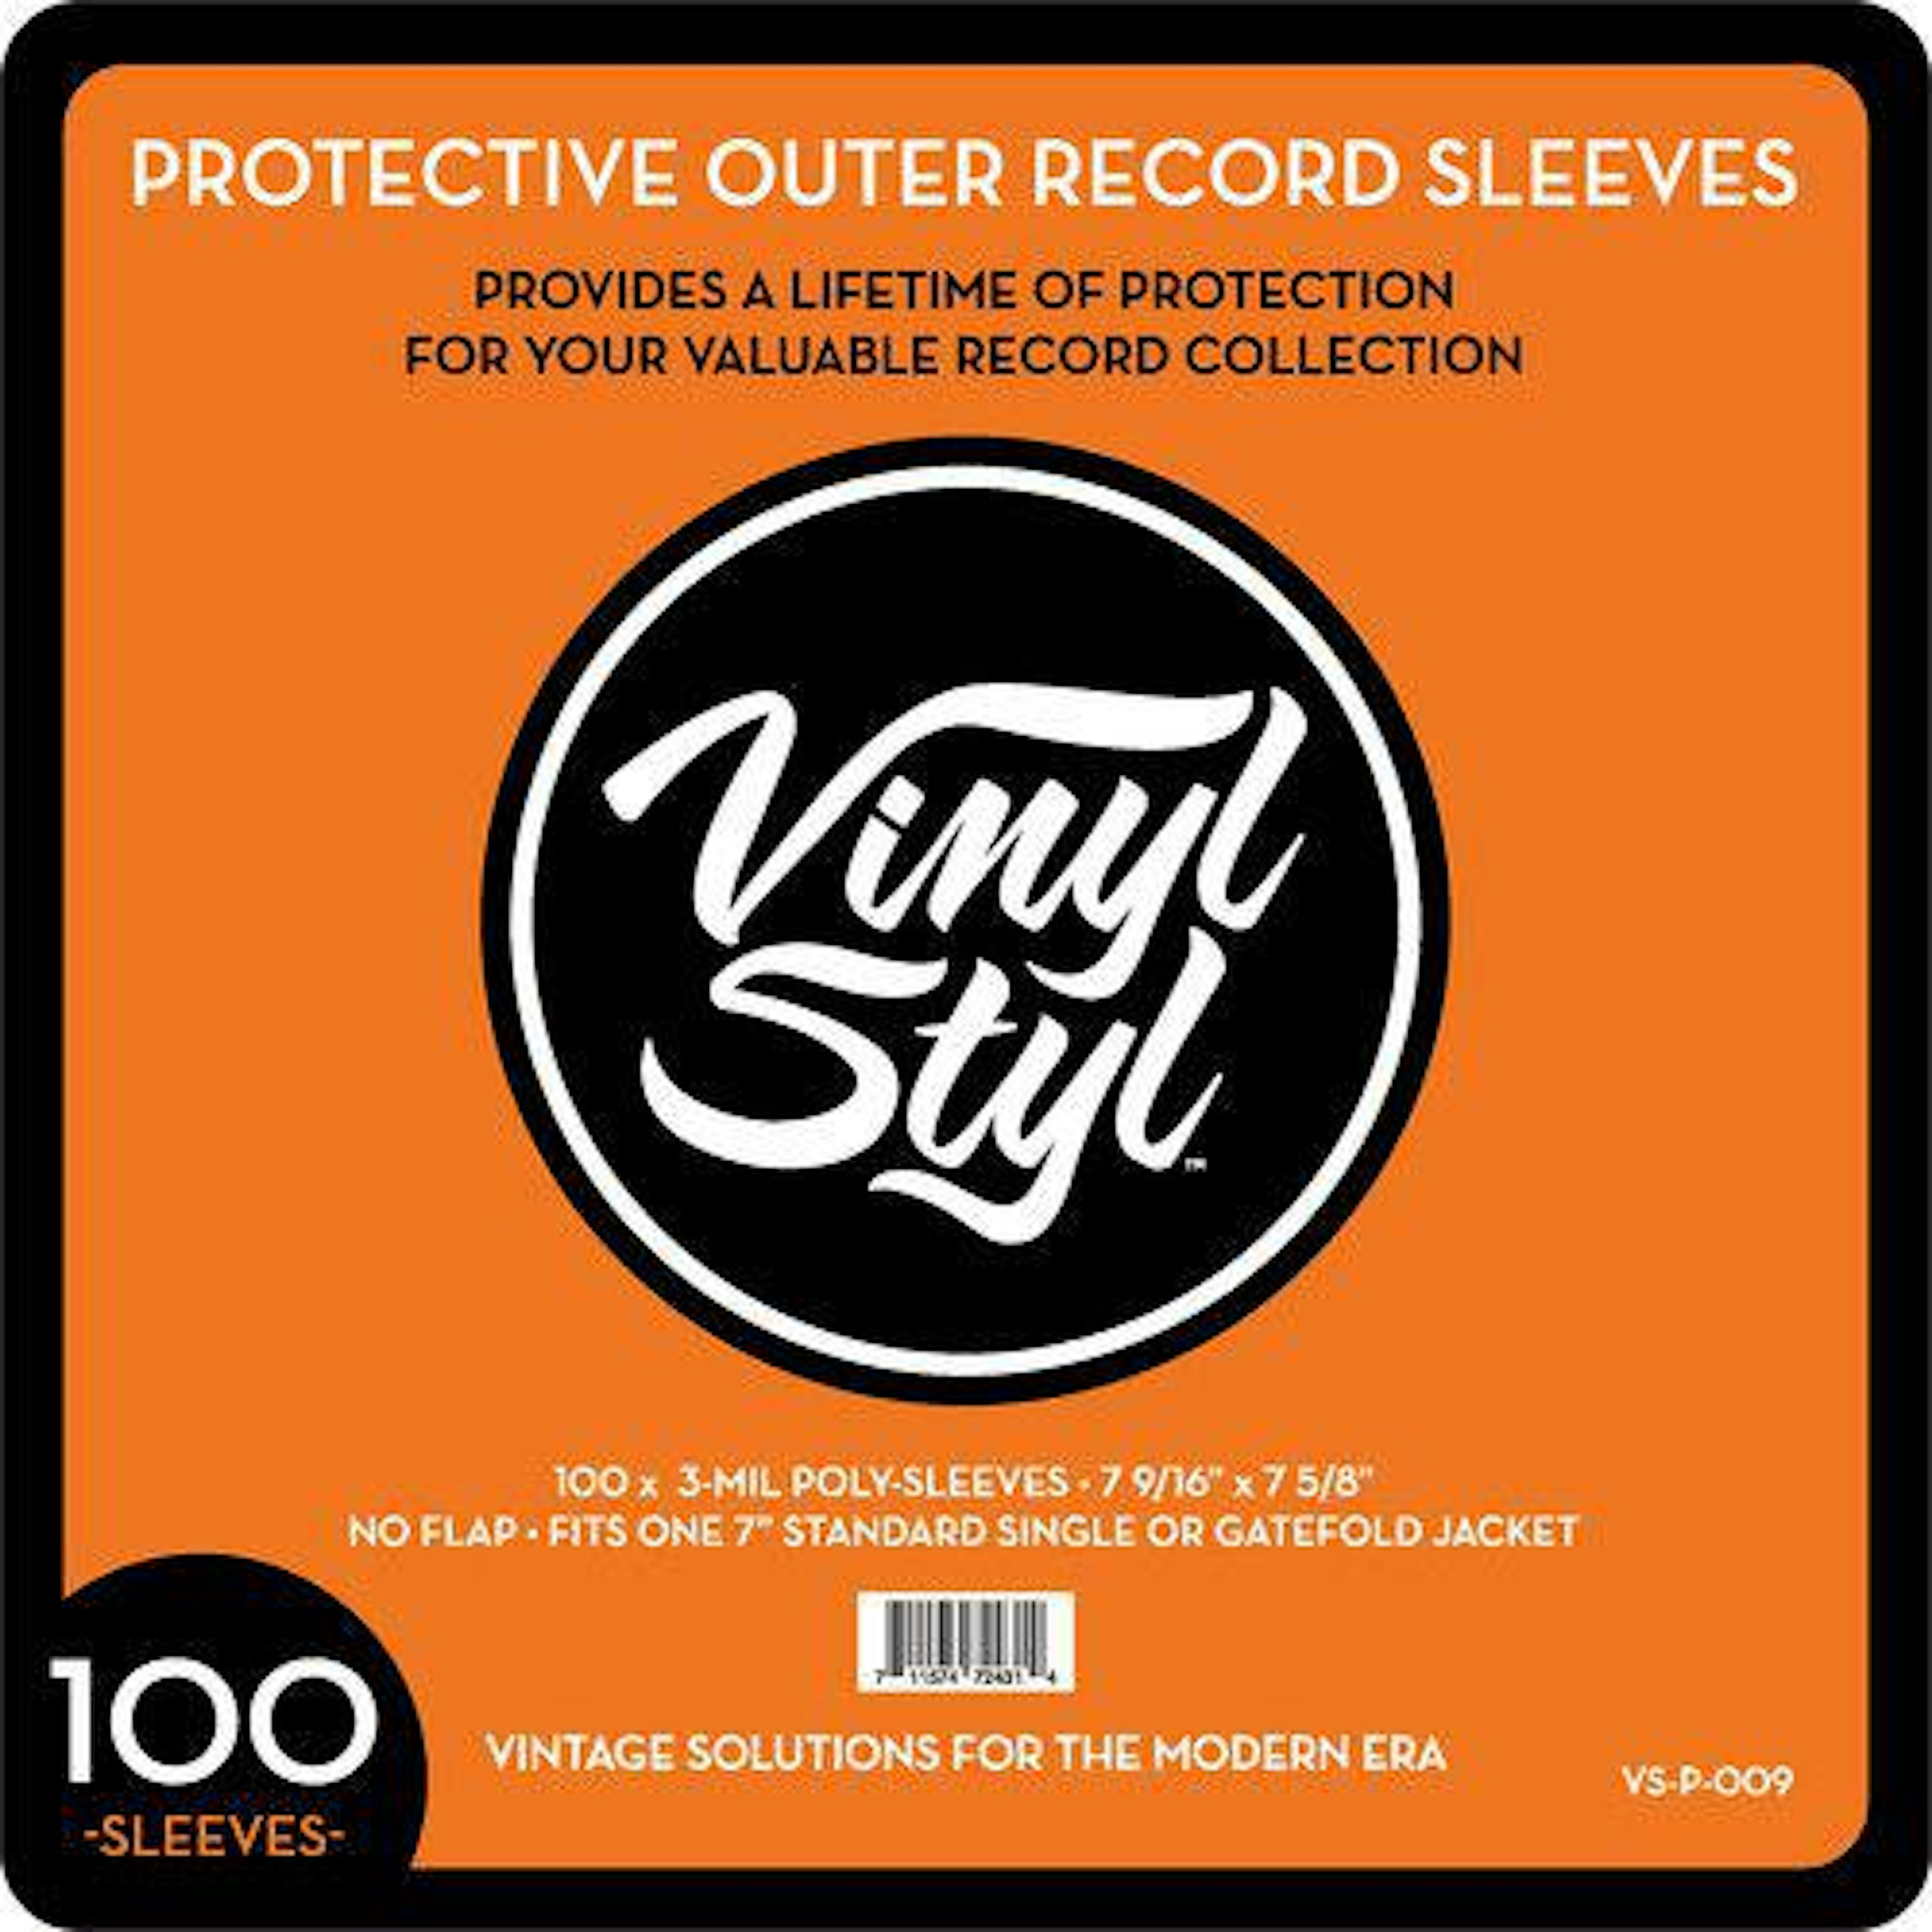 kollidere Nerve Forstad Vinyl accessories Vinyl Styl 45 RPM Record Outer Sleeve 100 CNT Clr